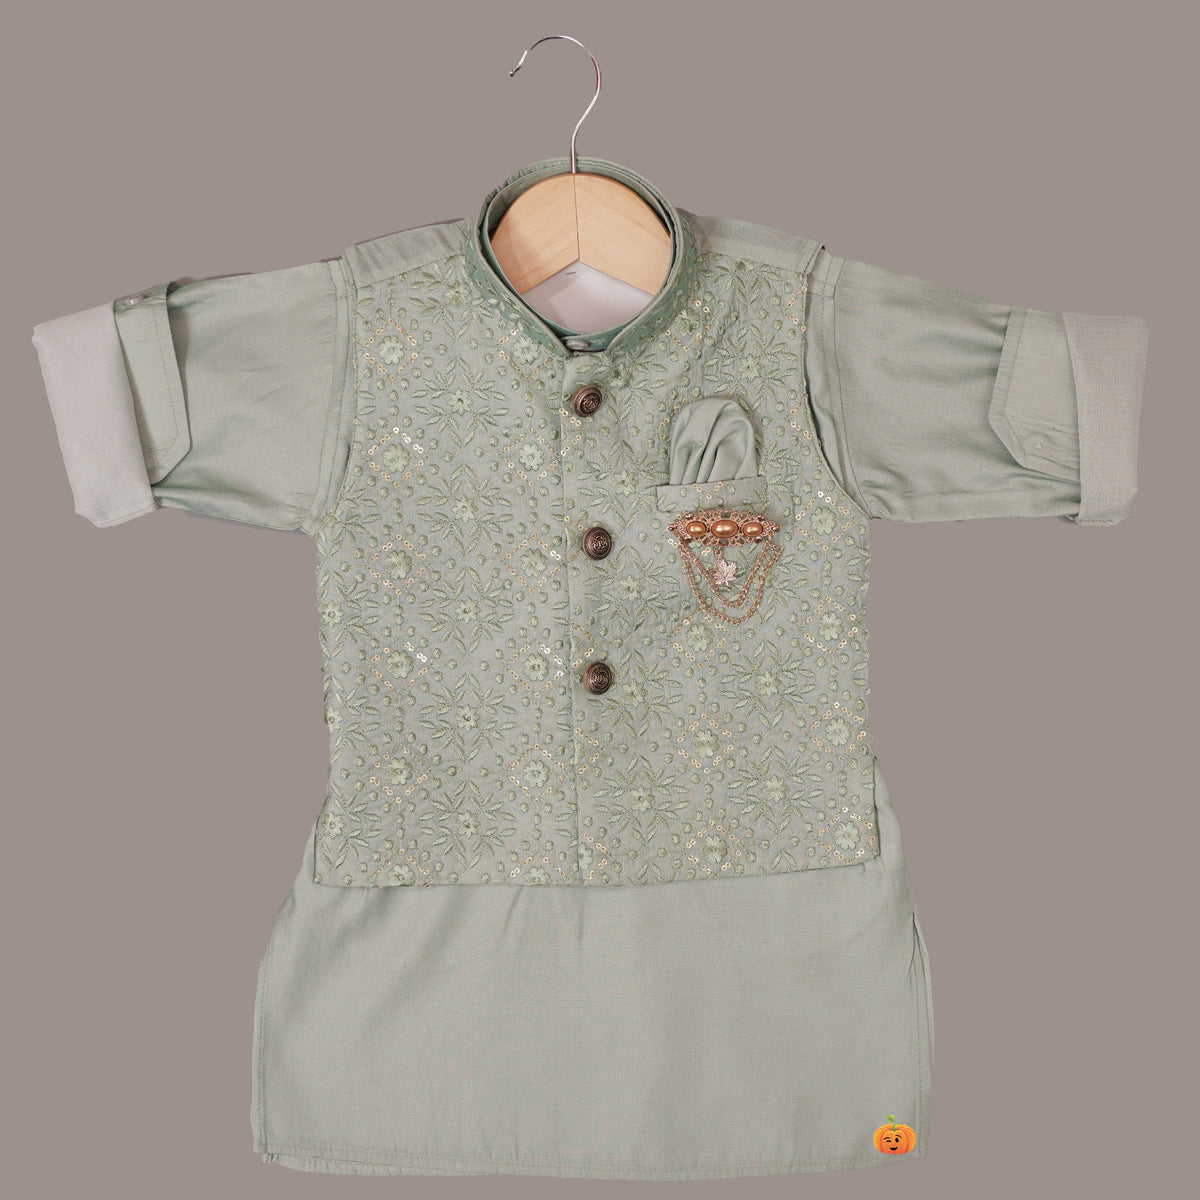 Kids Wear Shop in Ahmedabad | Baby Dresses Online Store Gujarat | Best Baby  Gifts Ideas